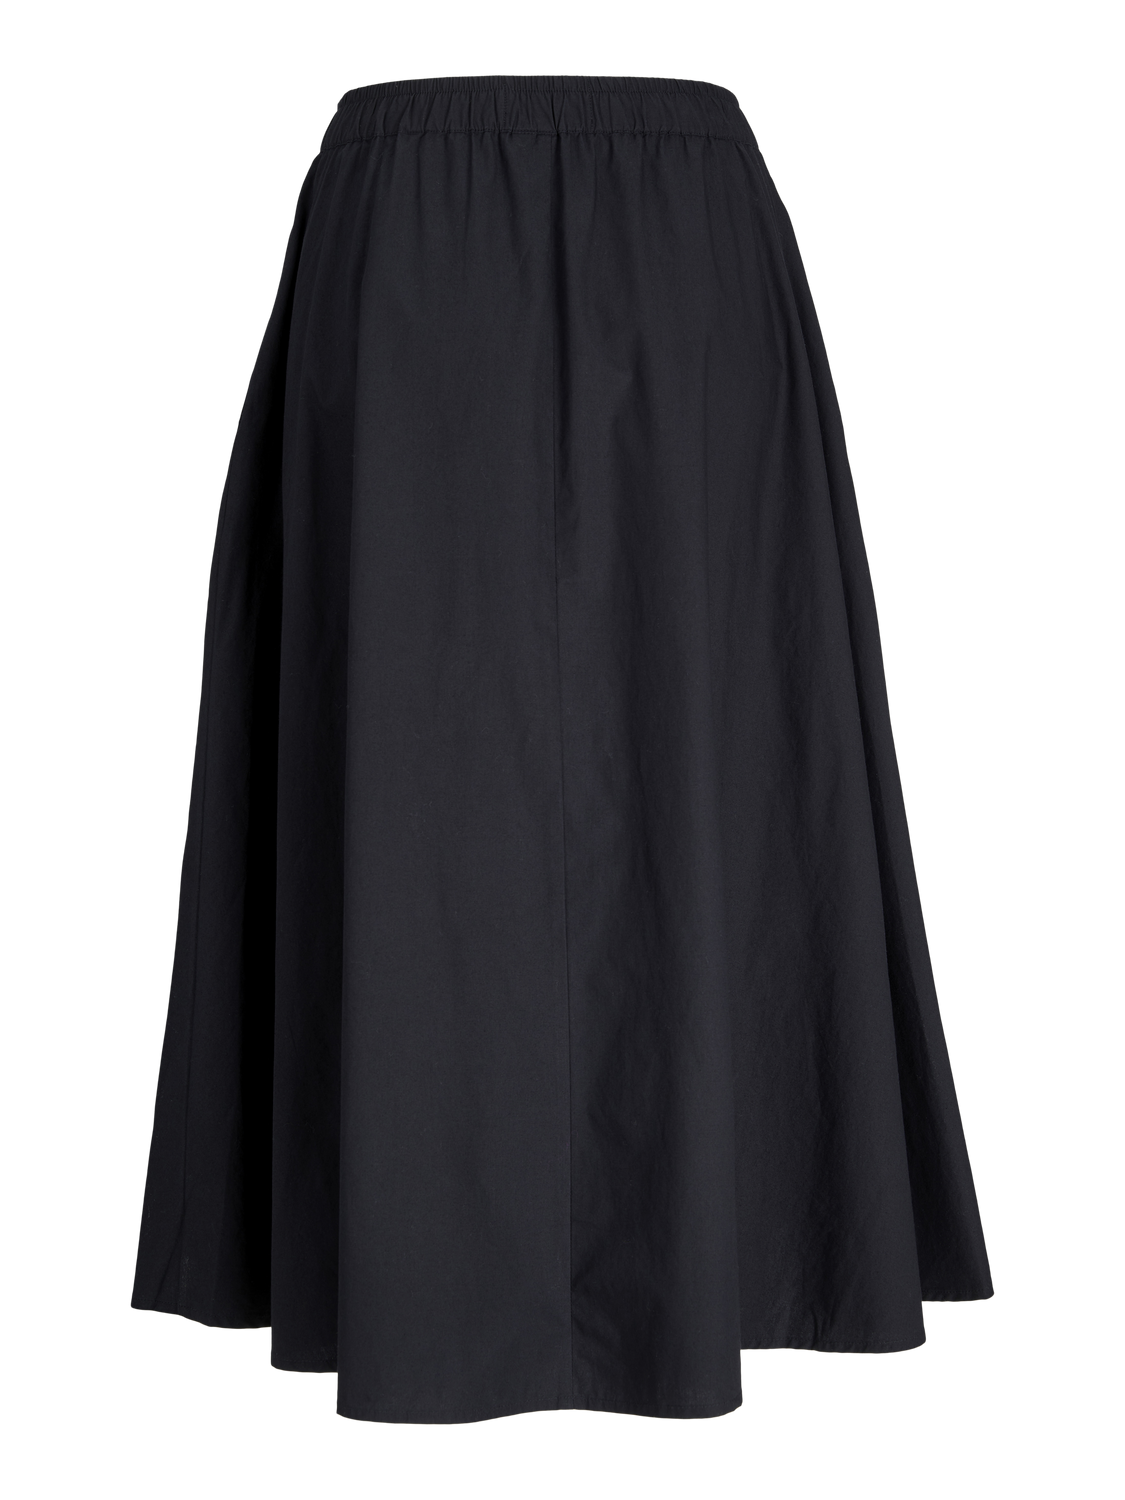 JXOAKLEY Skirt - Black